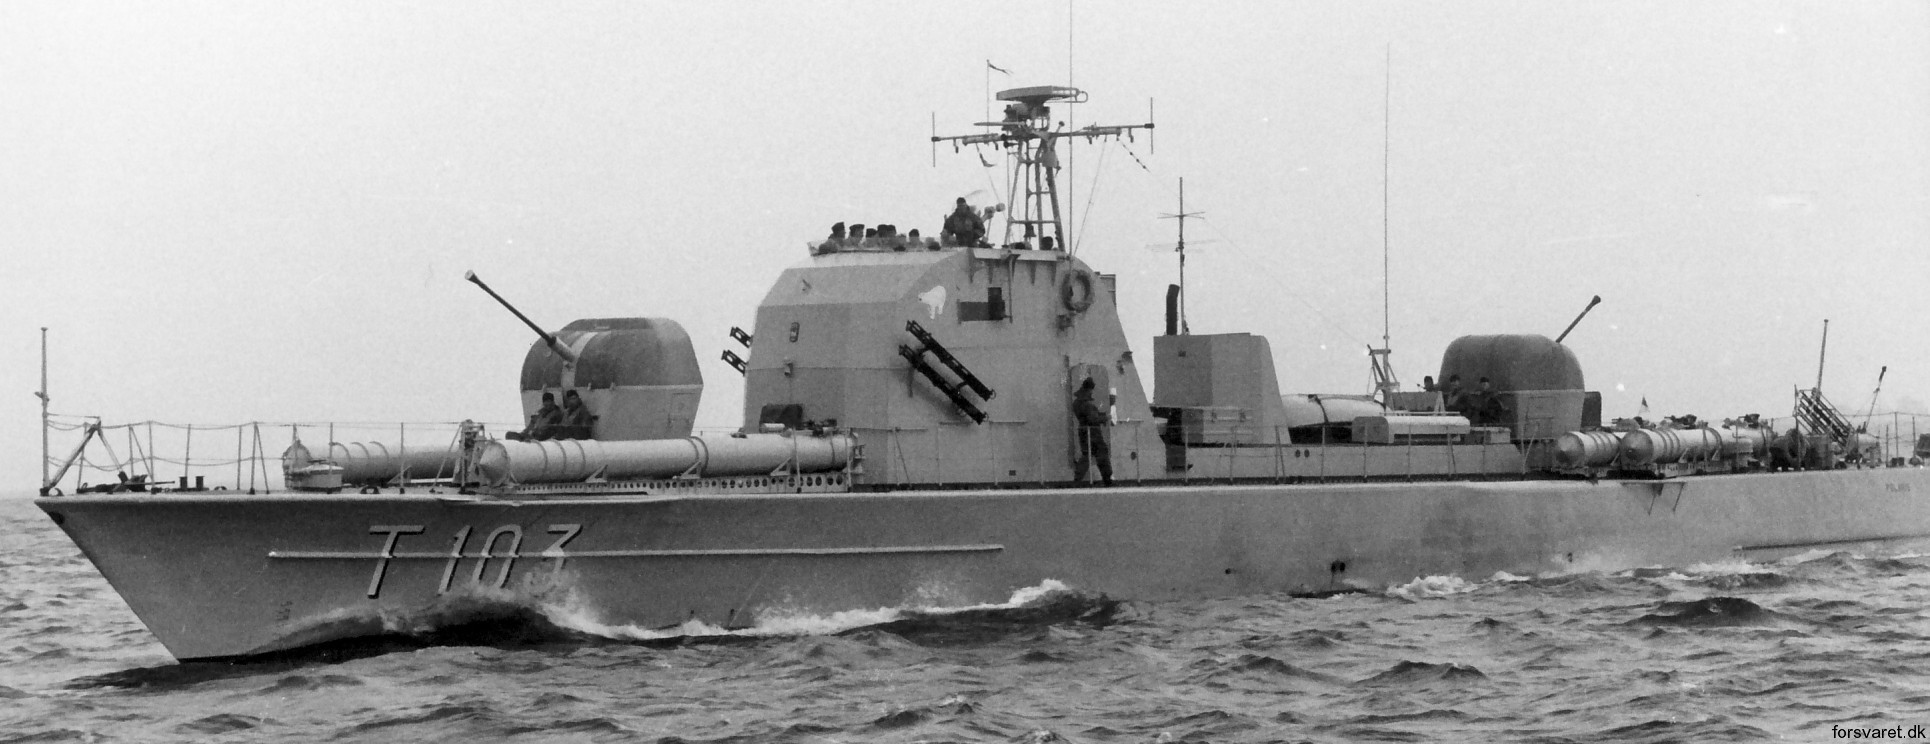 t103 polaris hms hswms plejad class fast attack craft torpedo boat vessel swedish navy svenska marinen 02